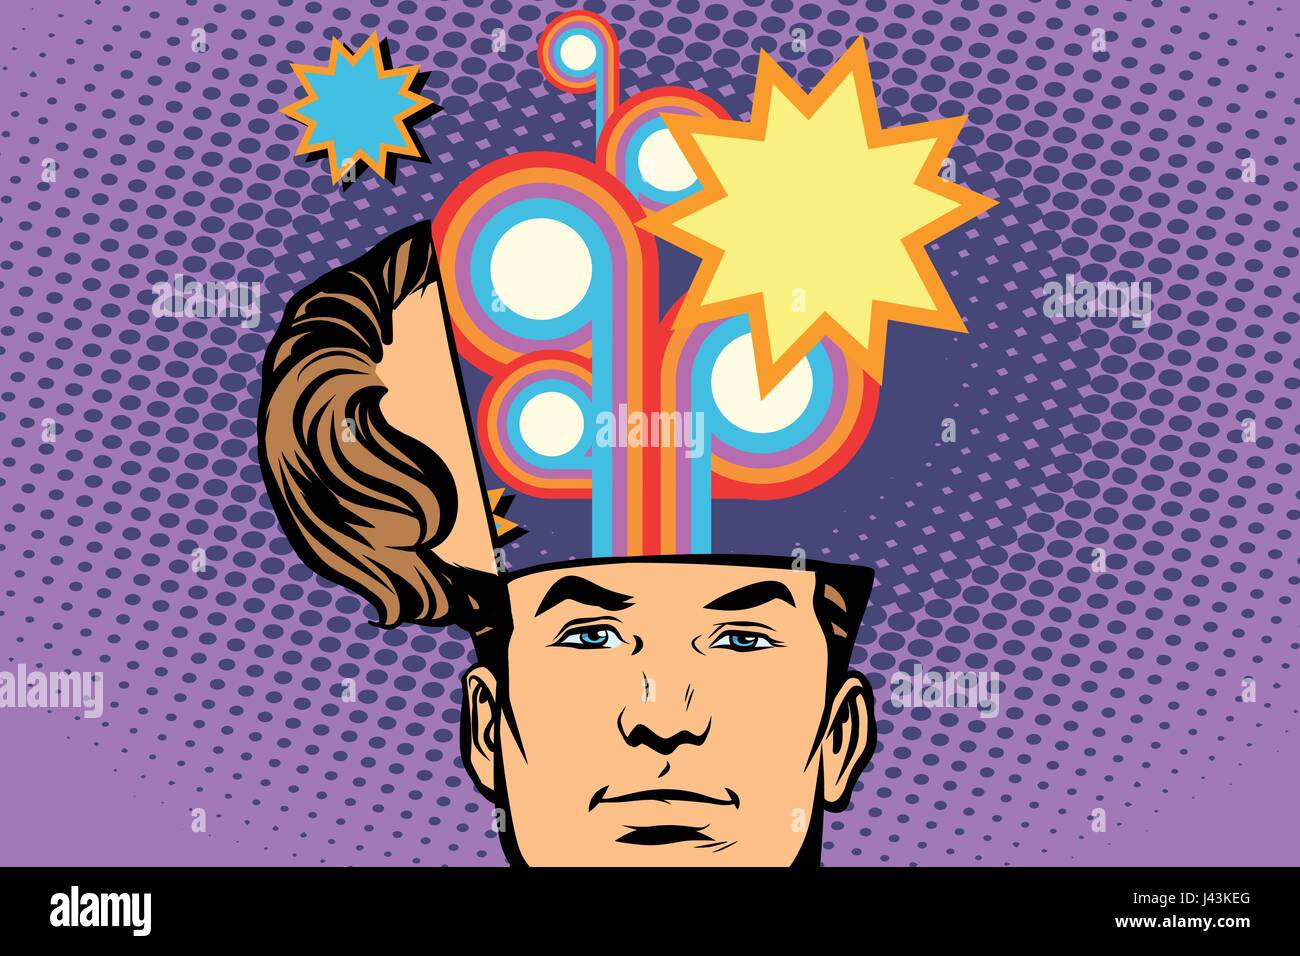 Mann mit einem offenen Kopf Festival Feuerwerk-Karneval. Comic-Cartoon-Stil-Pop-Art-Retro-Farbe-Vektor-illustration Stock Vektor